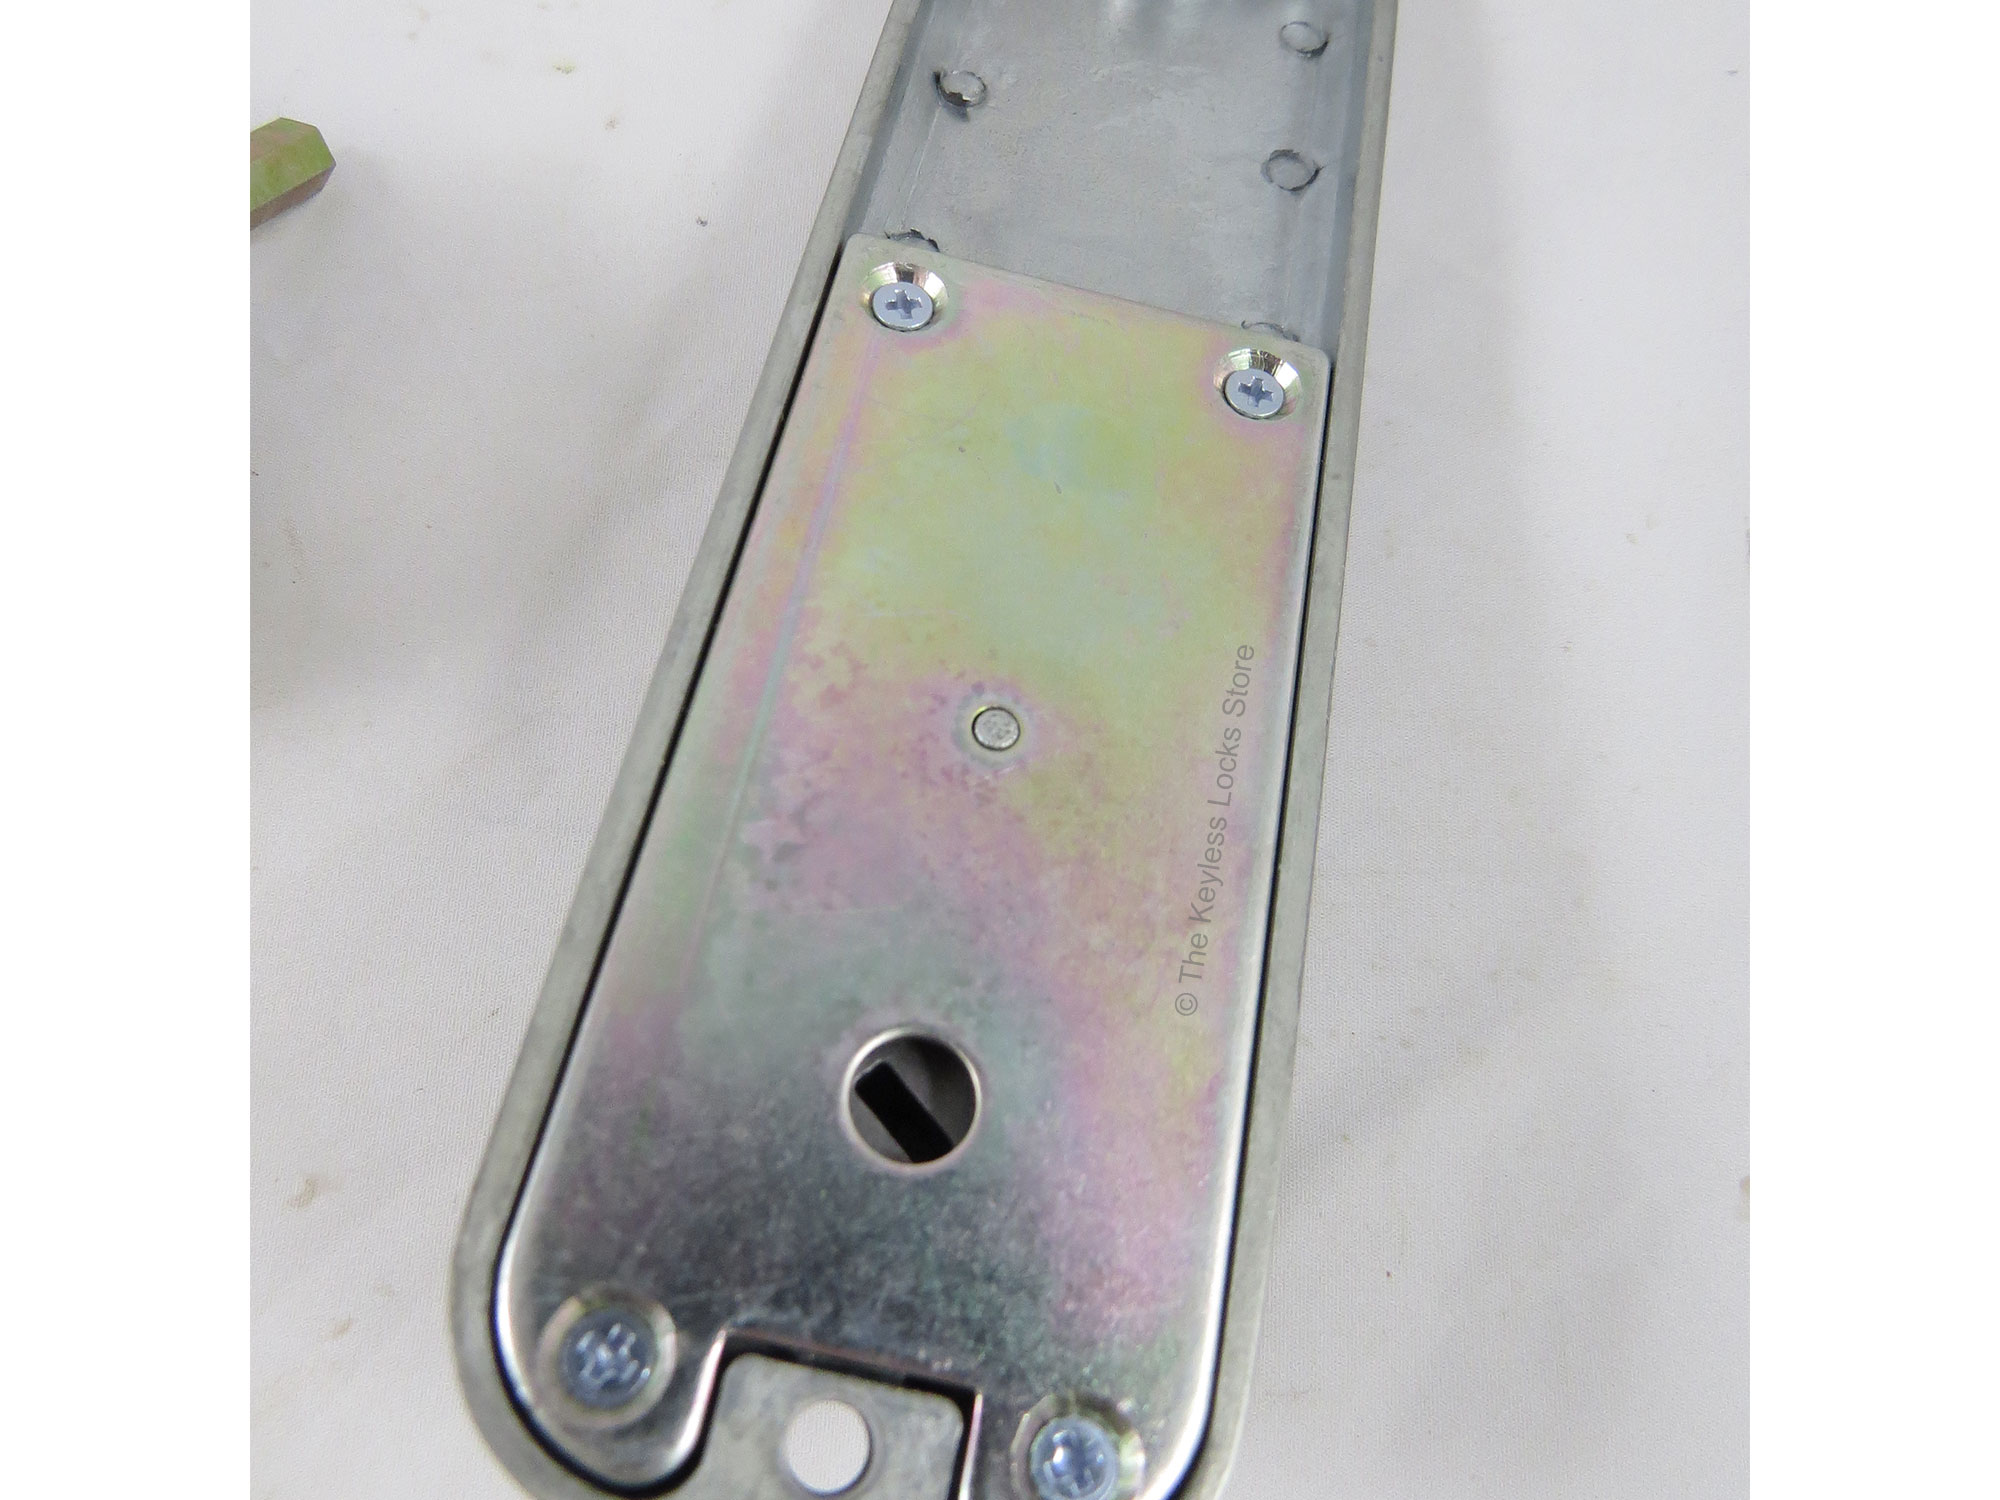 Lockey 2900 Narrow-Stile Knob-Handle Keypad Deadbolt Lock